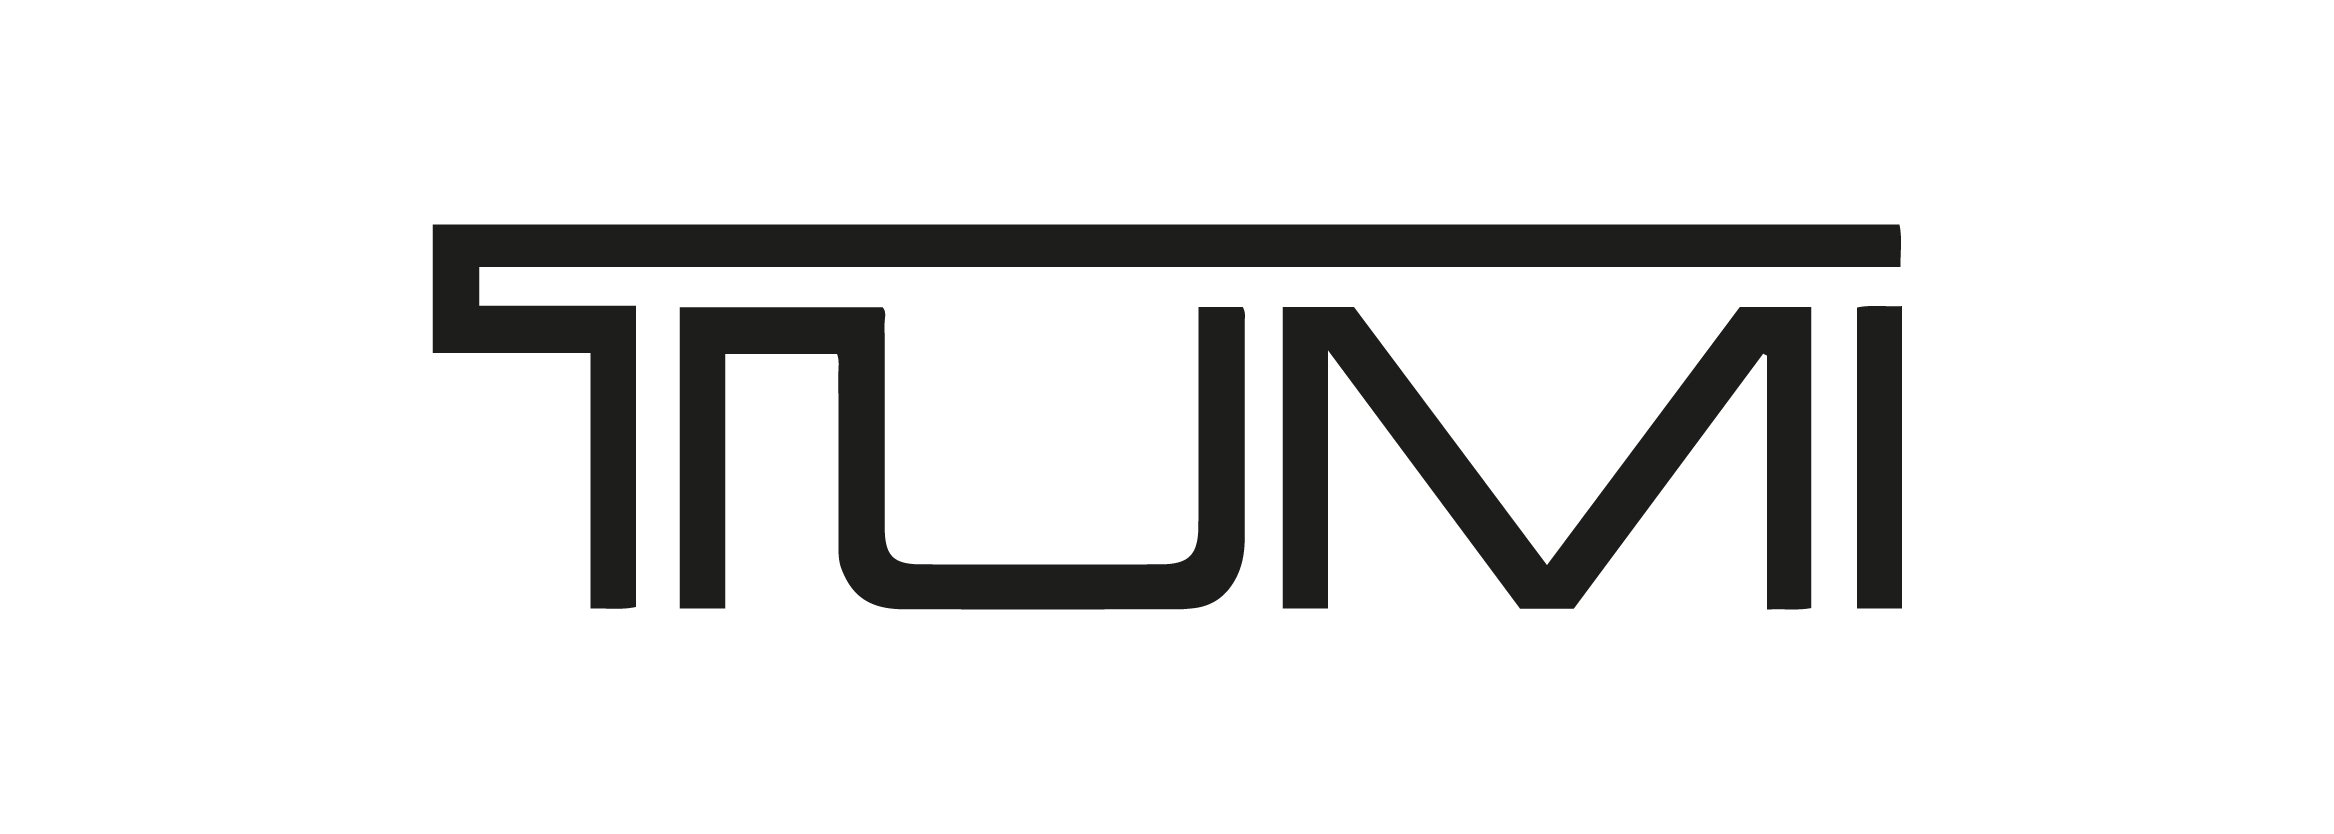 TUMI-22.jpg